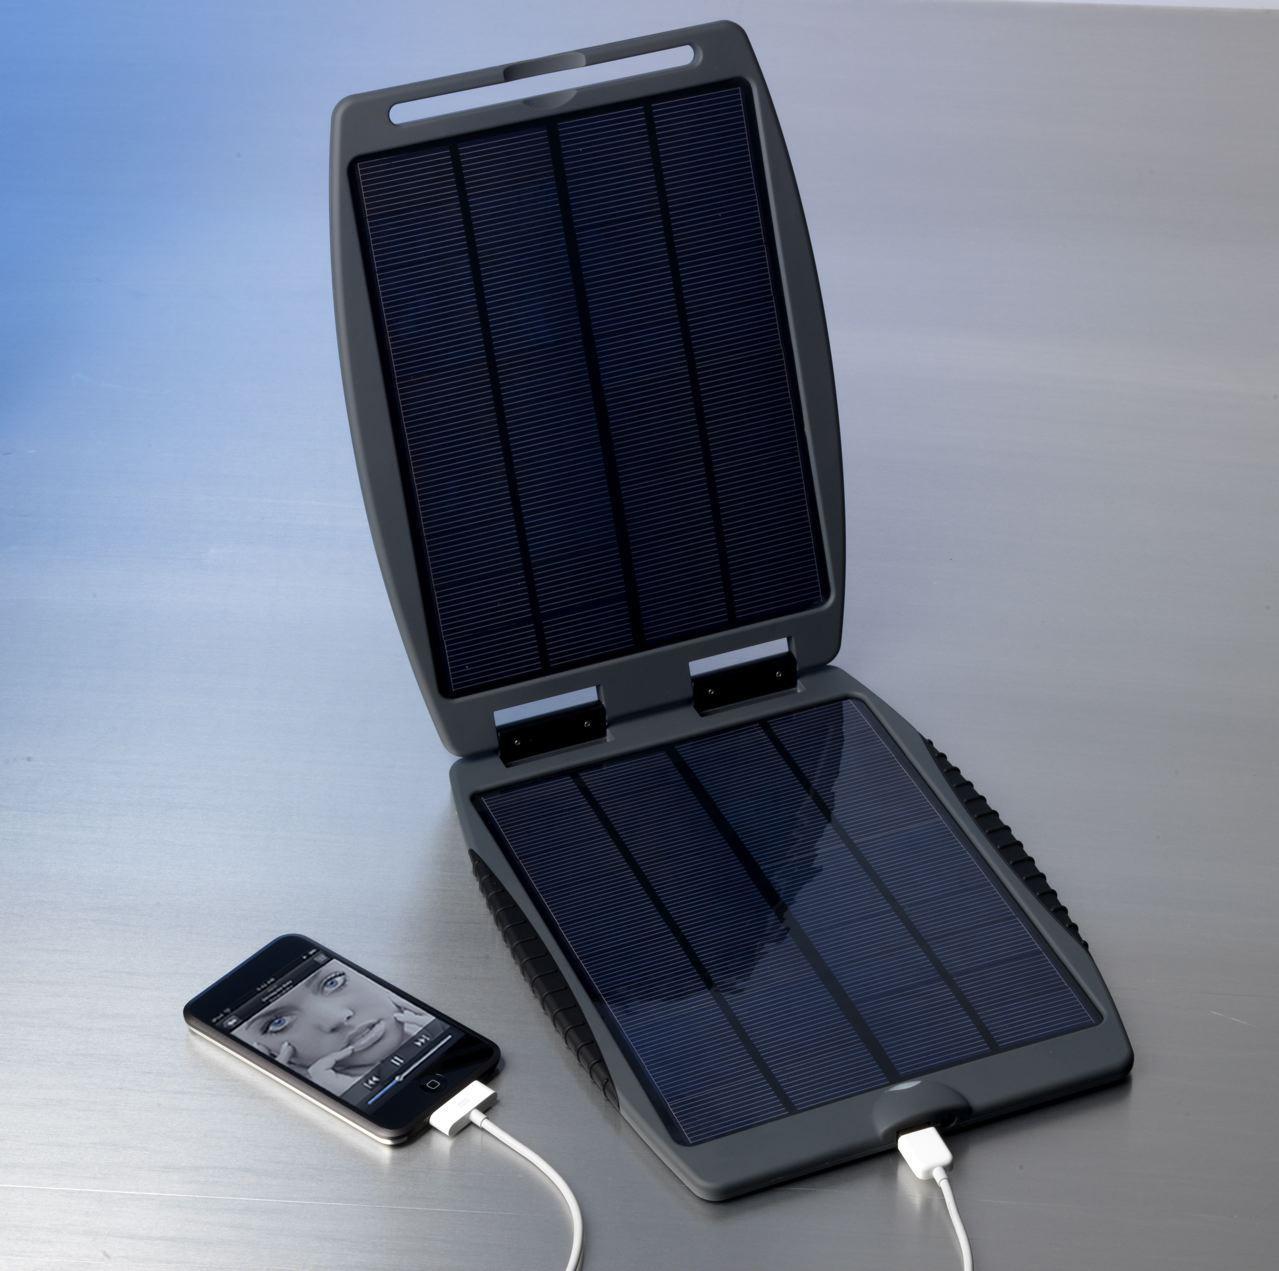 PowerTraveller Solargorilla 5V and 20V Solar Portable Charger